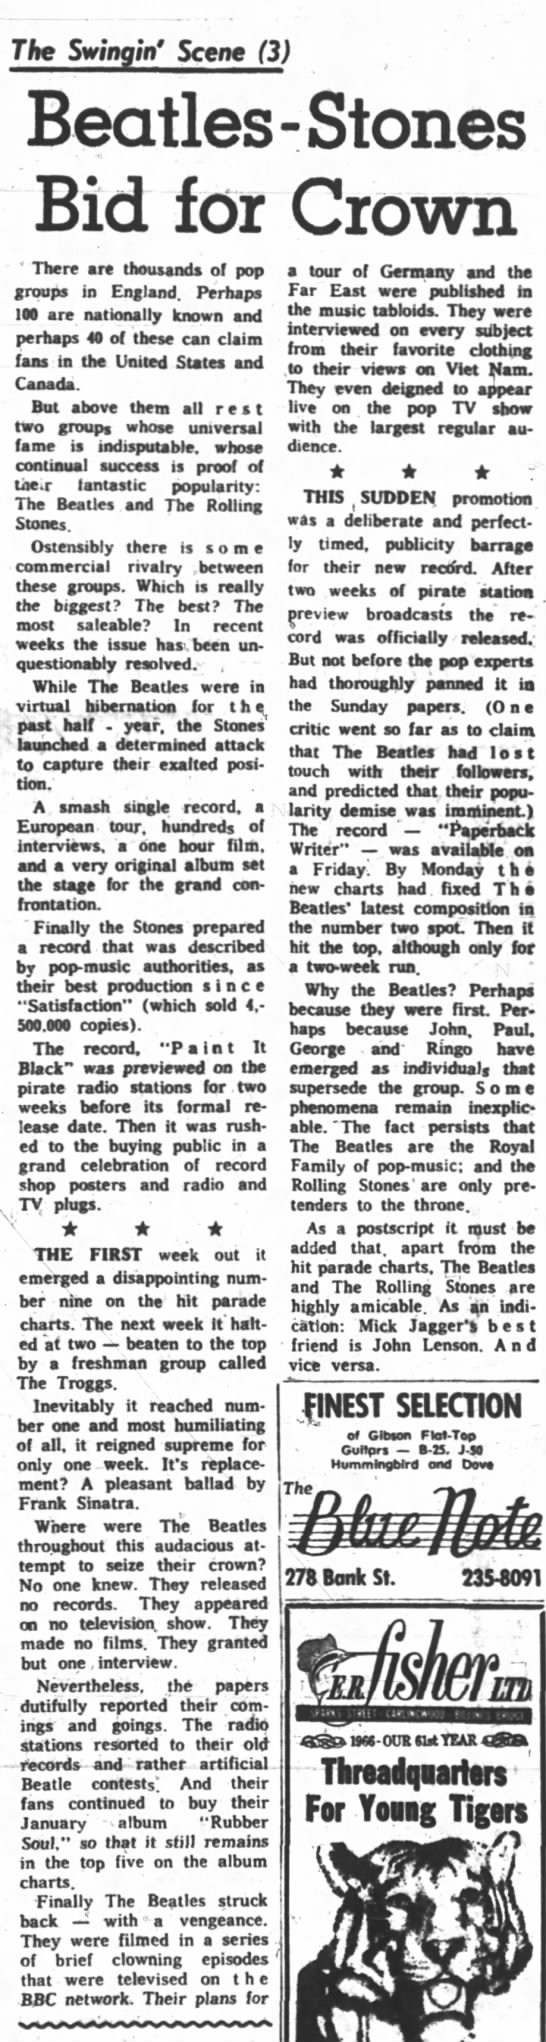 Ottawa Journal - August 6 1966 - page 48 - Beatles Stones bid for Crown - 